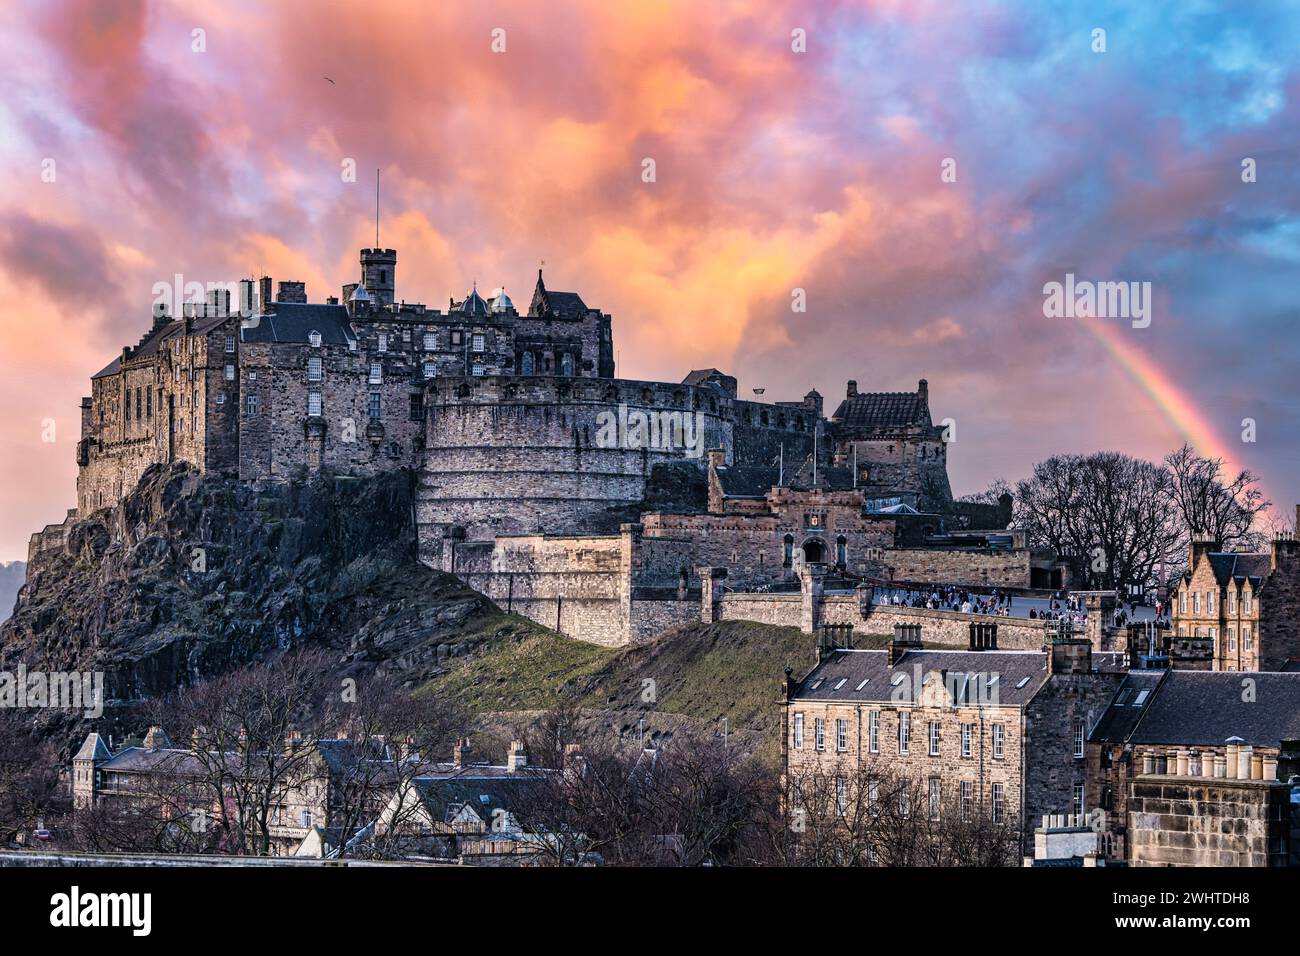 View of Edinburgh Castle and city skyline at sunset with rainbow, Scotland, UK Stock Photo